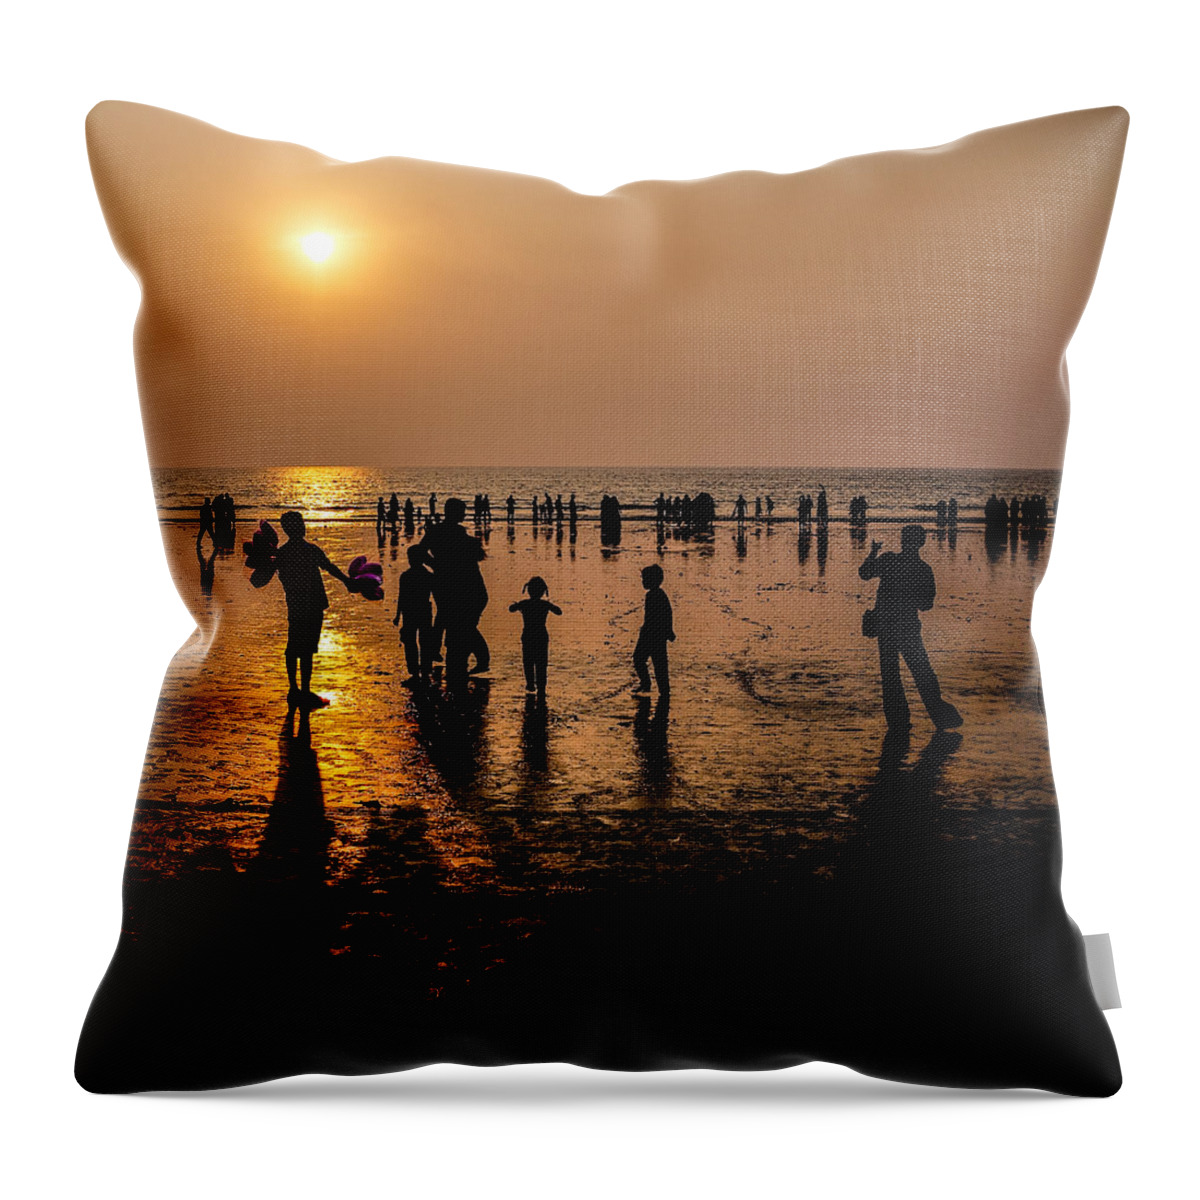 Mumbai Throw Pillow featuring the photograph Mumbai Sunset by M G Whittingham